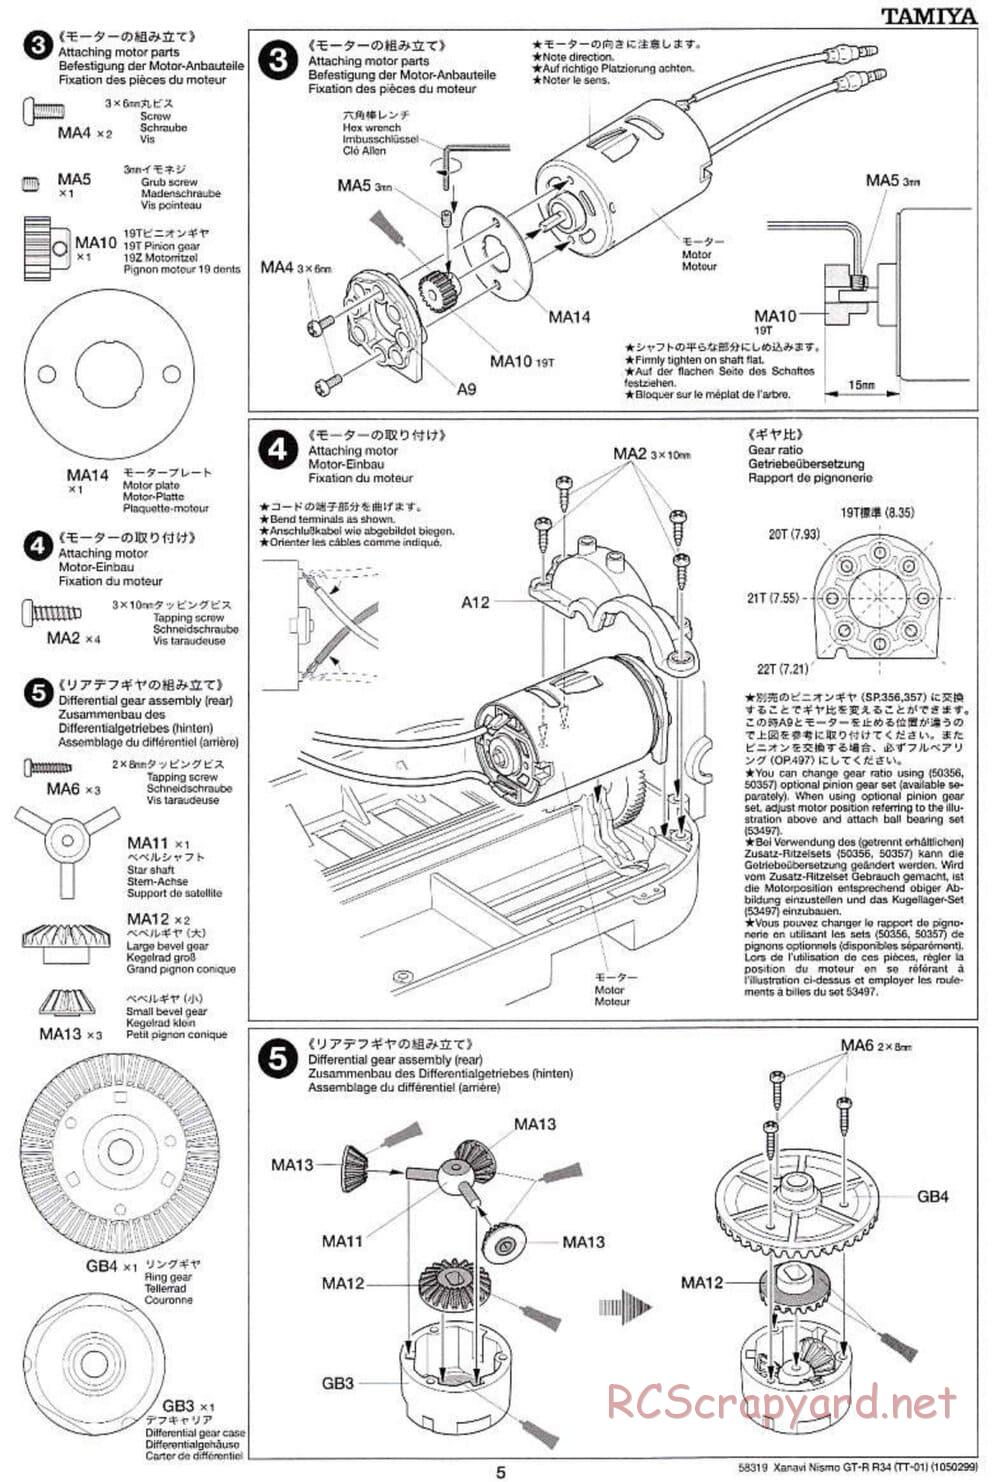 Tamiya - Xanavi Nismo GT-R R34 - TT-01 Chassis - Manual - Page 5